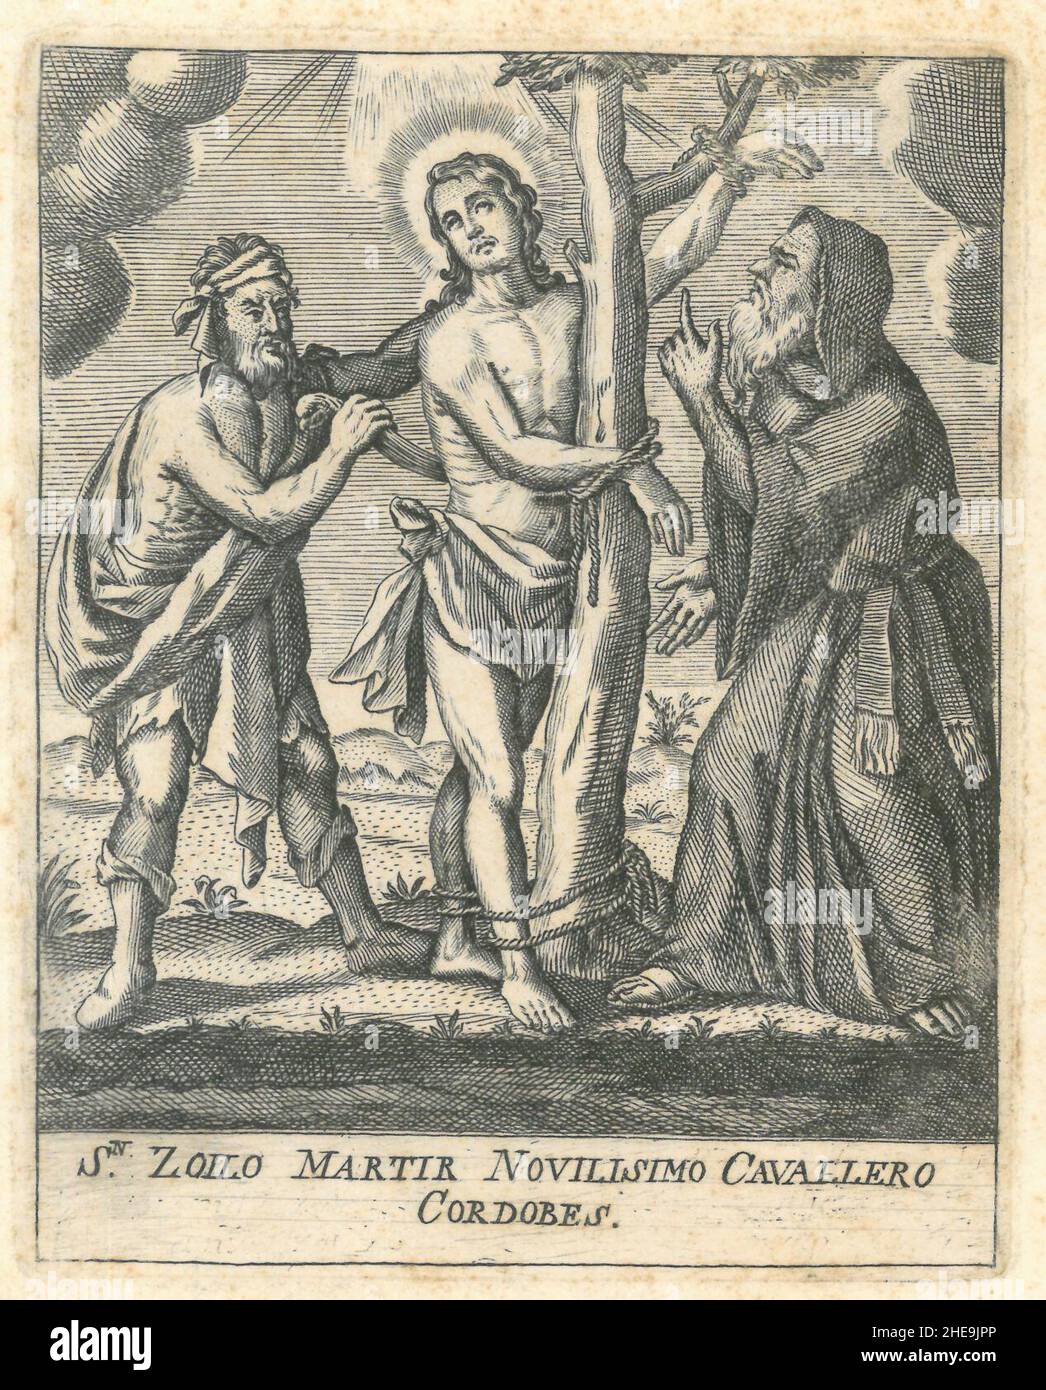 San Zoilo mártir-Nicolás Carrasco-1749. Stock Photo